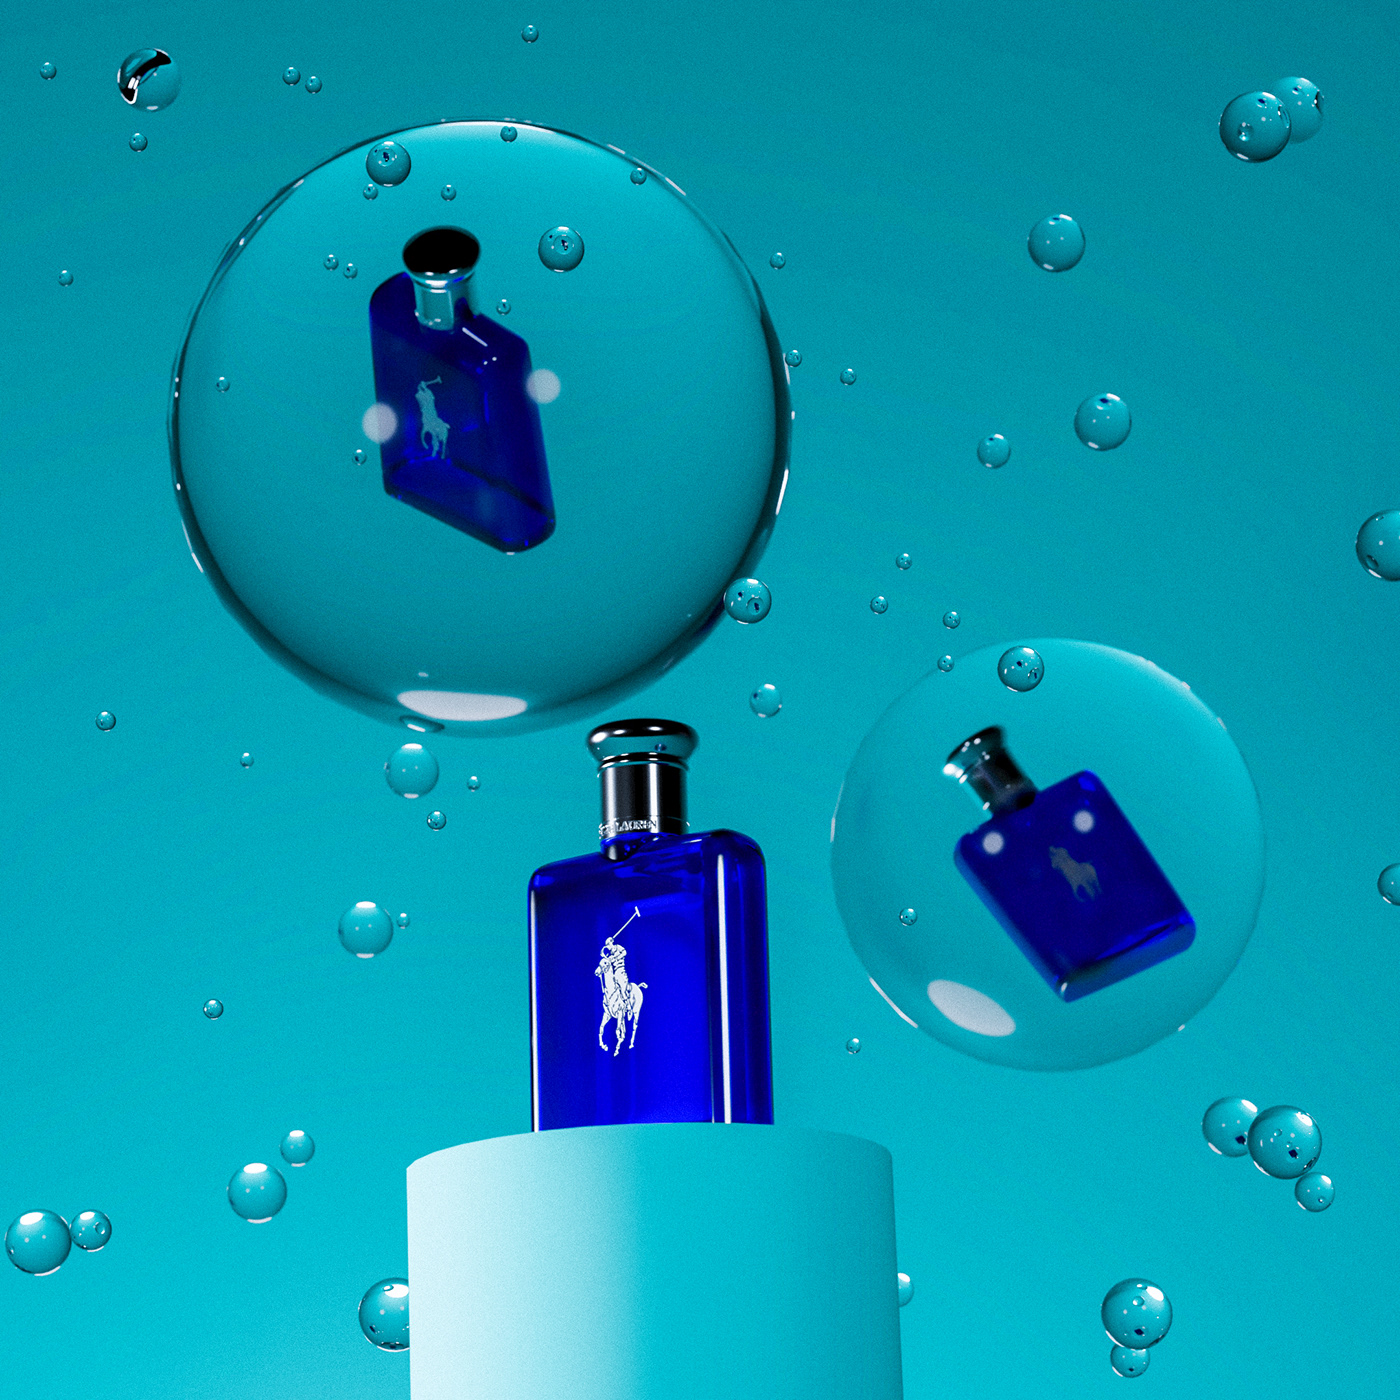 3ds max Perfumes perfume bottle 3Ds Max Vray ralph lauren 3D Rendering CGI perfume render